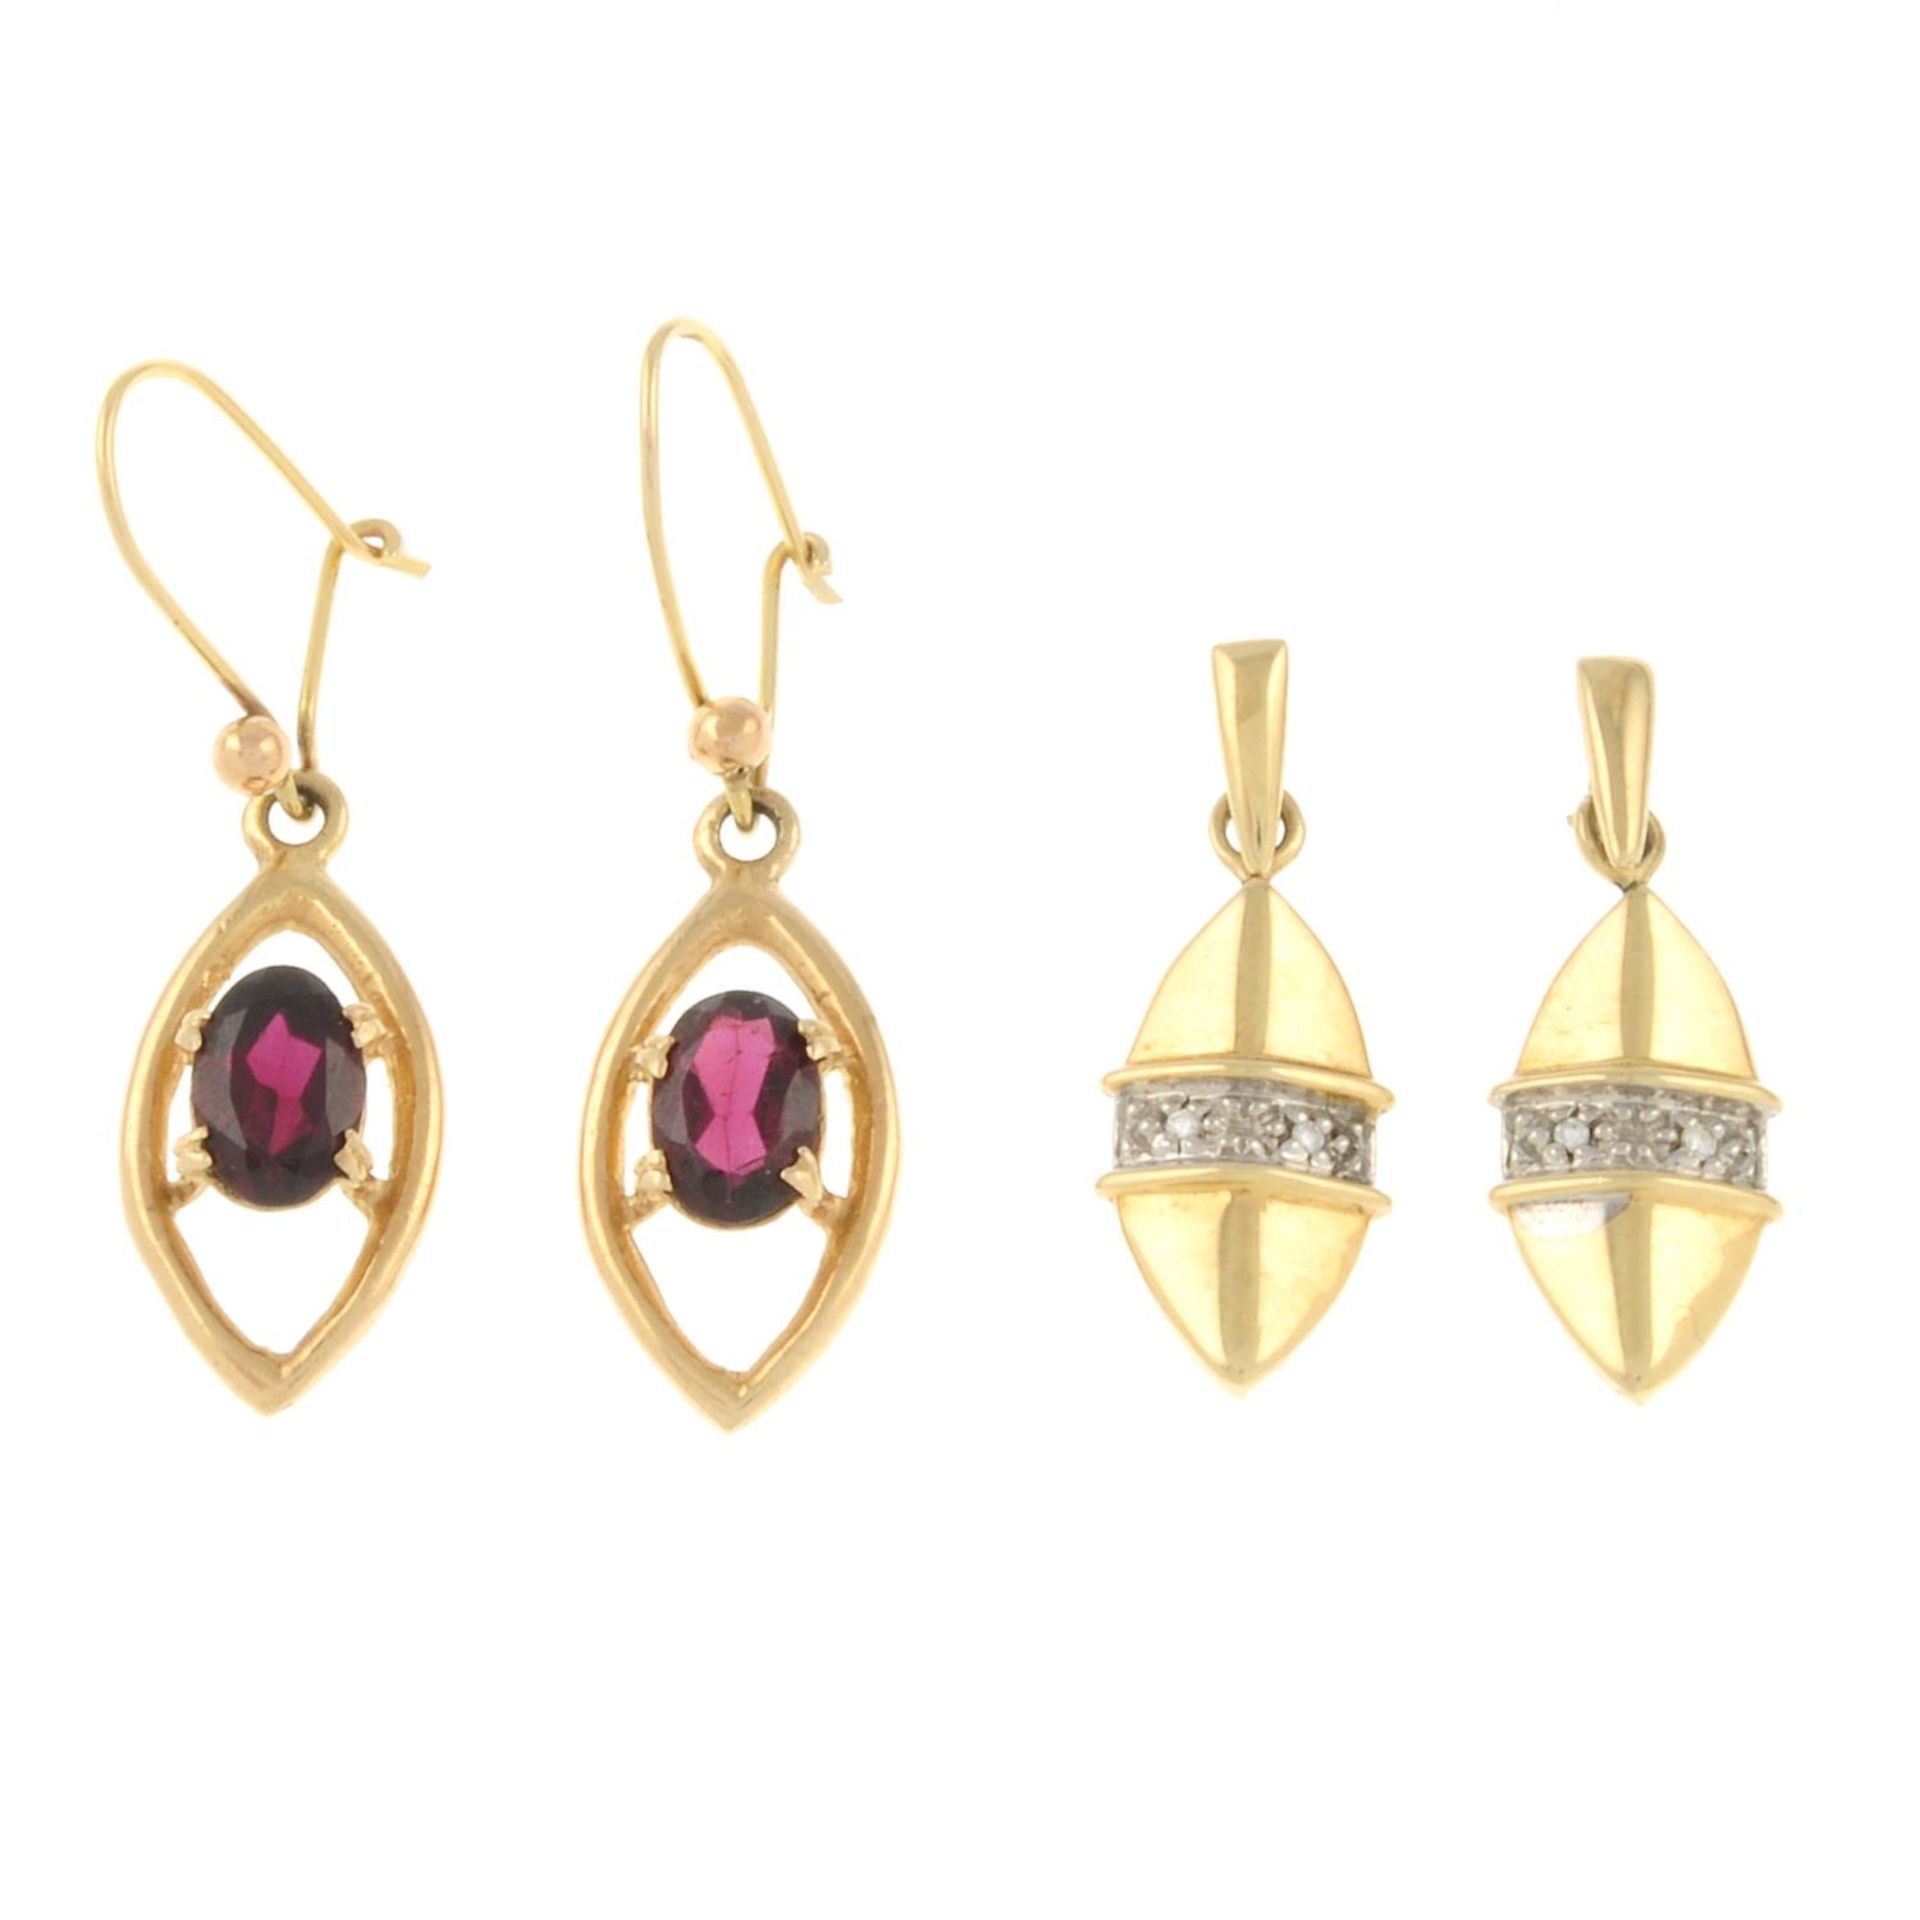 Diamond drop earrings, stamped 9k, length 2.3cms, 2.4gms.